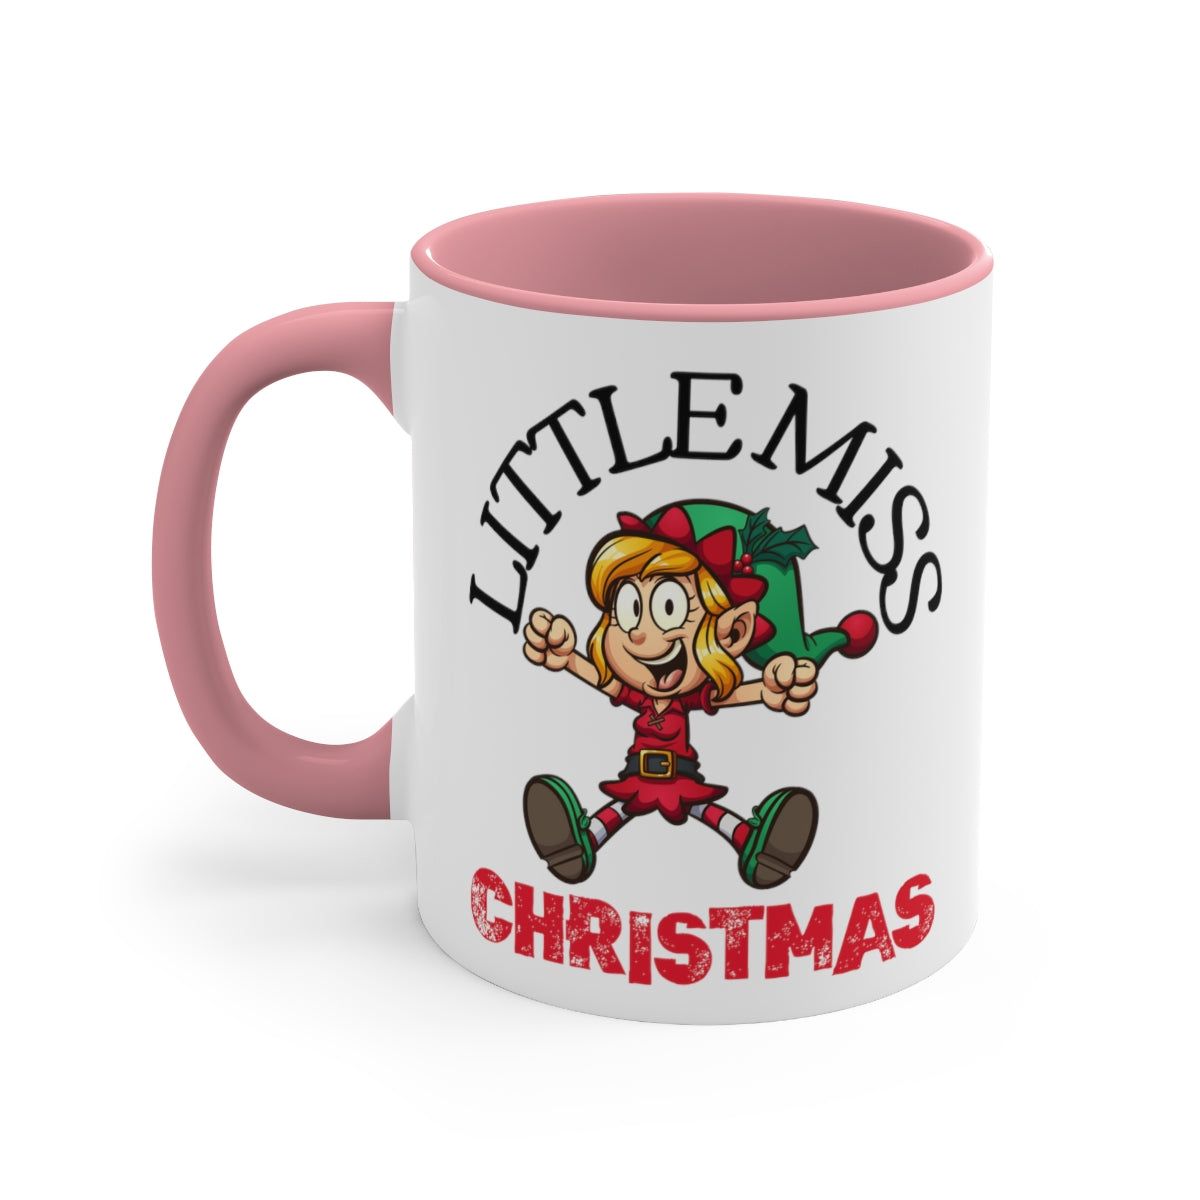 Little Miss Christmas Mug